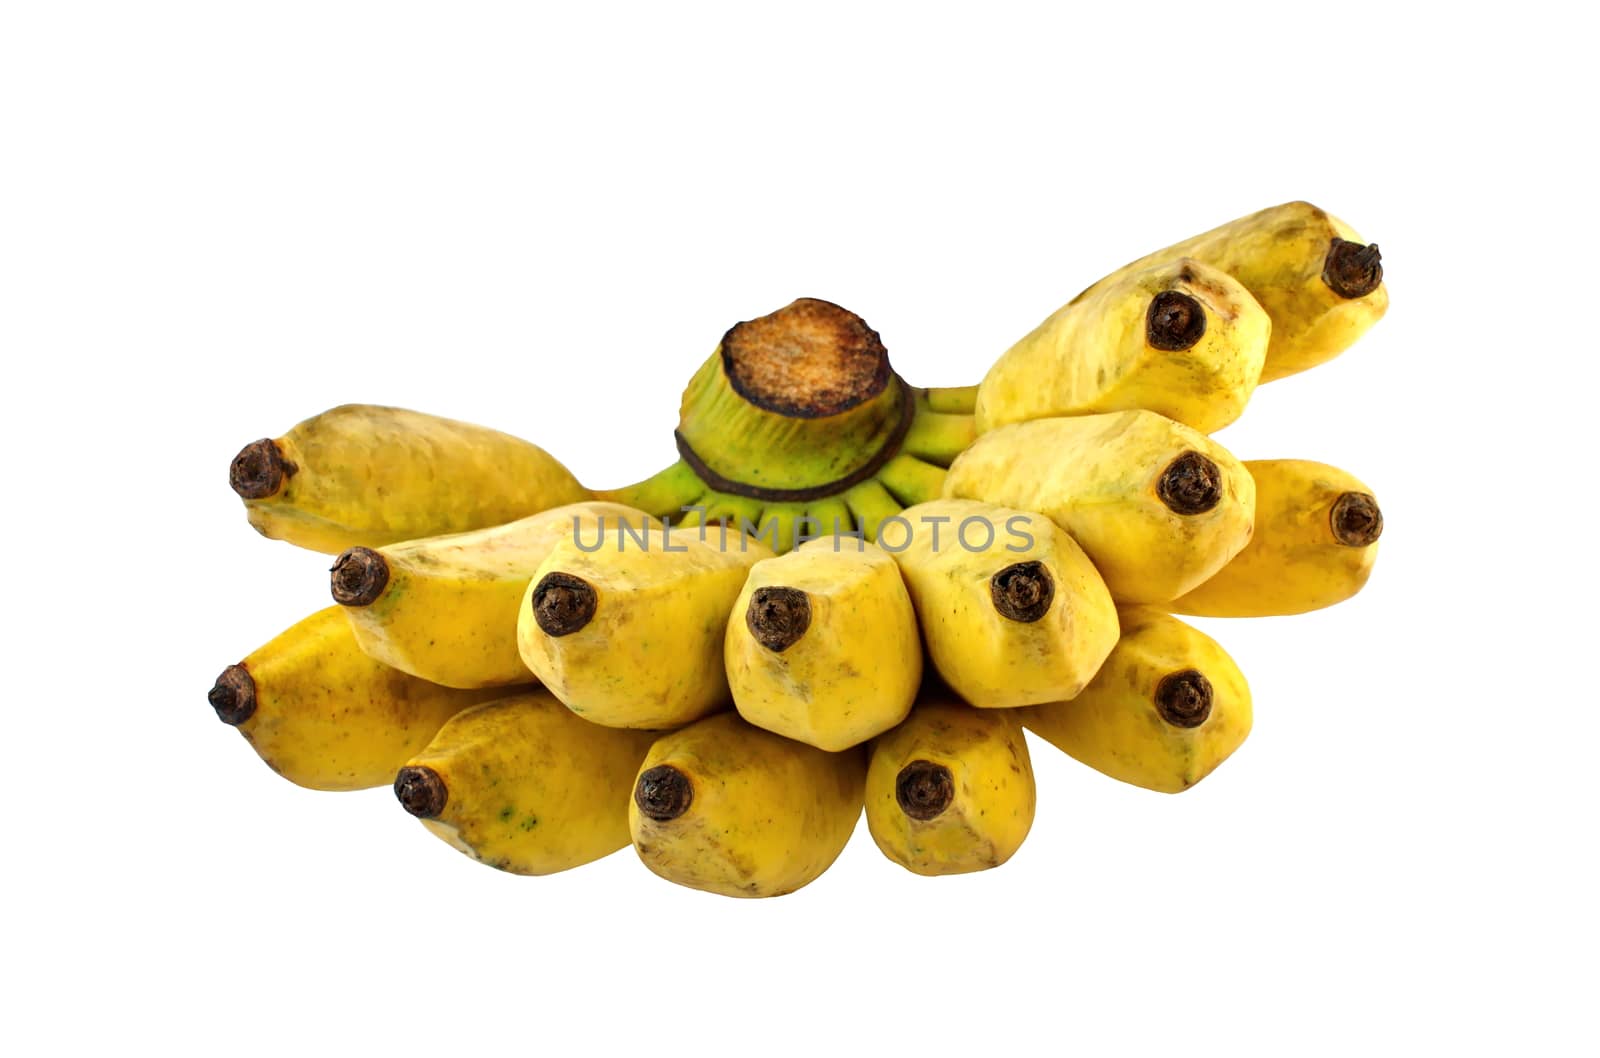 Pisang Awak banana, Namwa banana, Cultivate banana on isolate white background